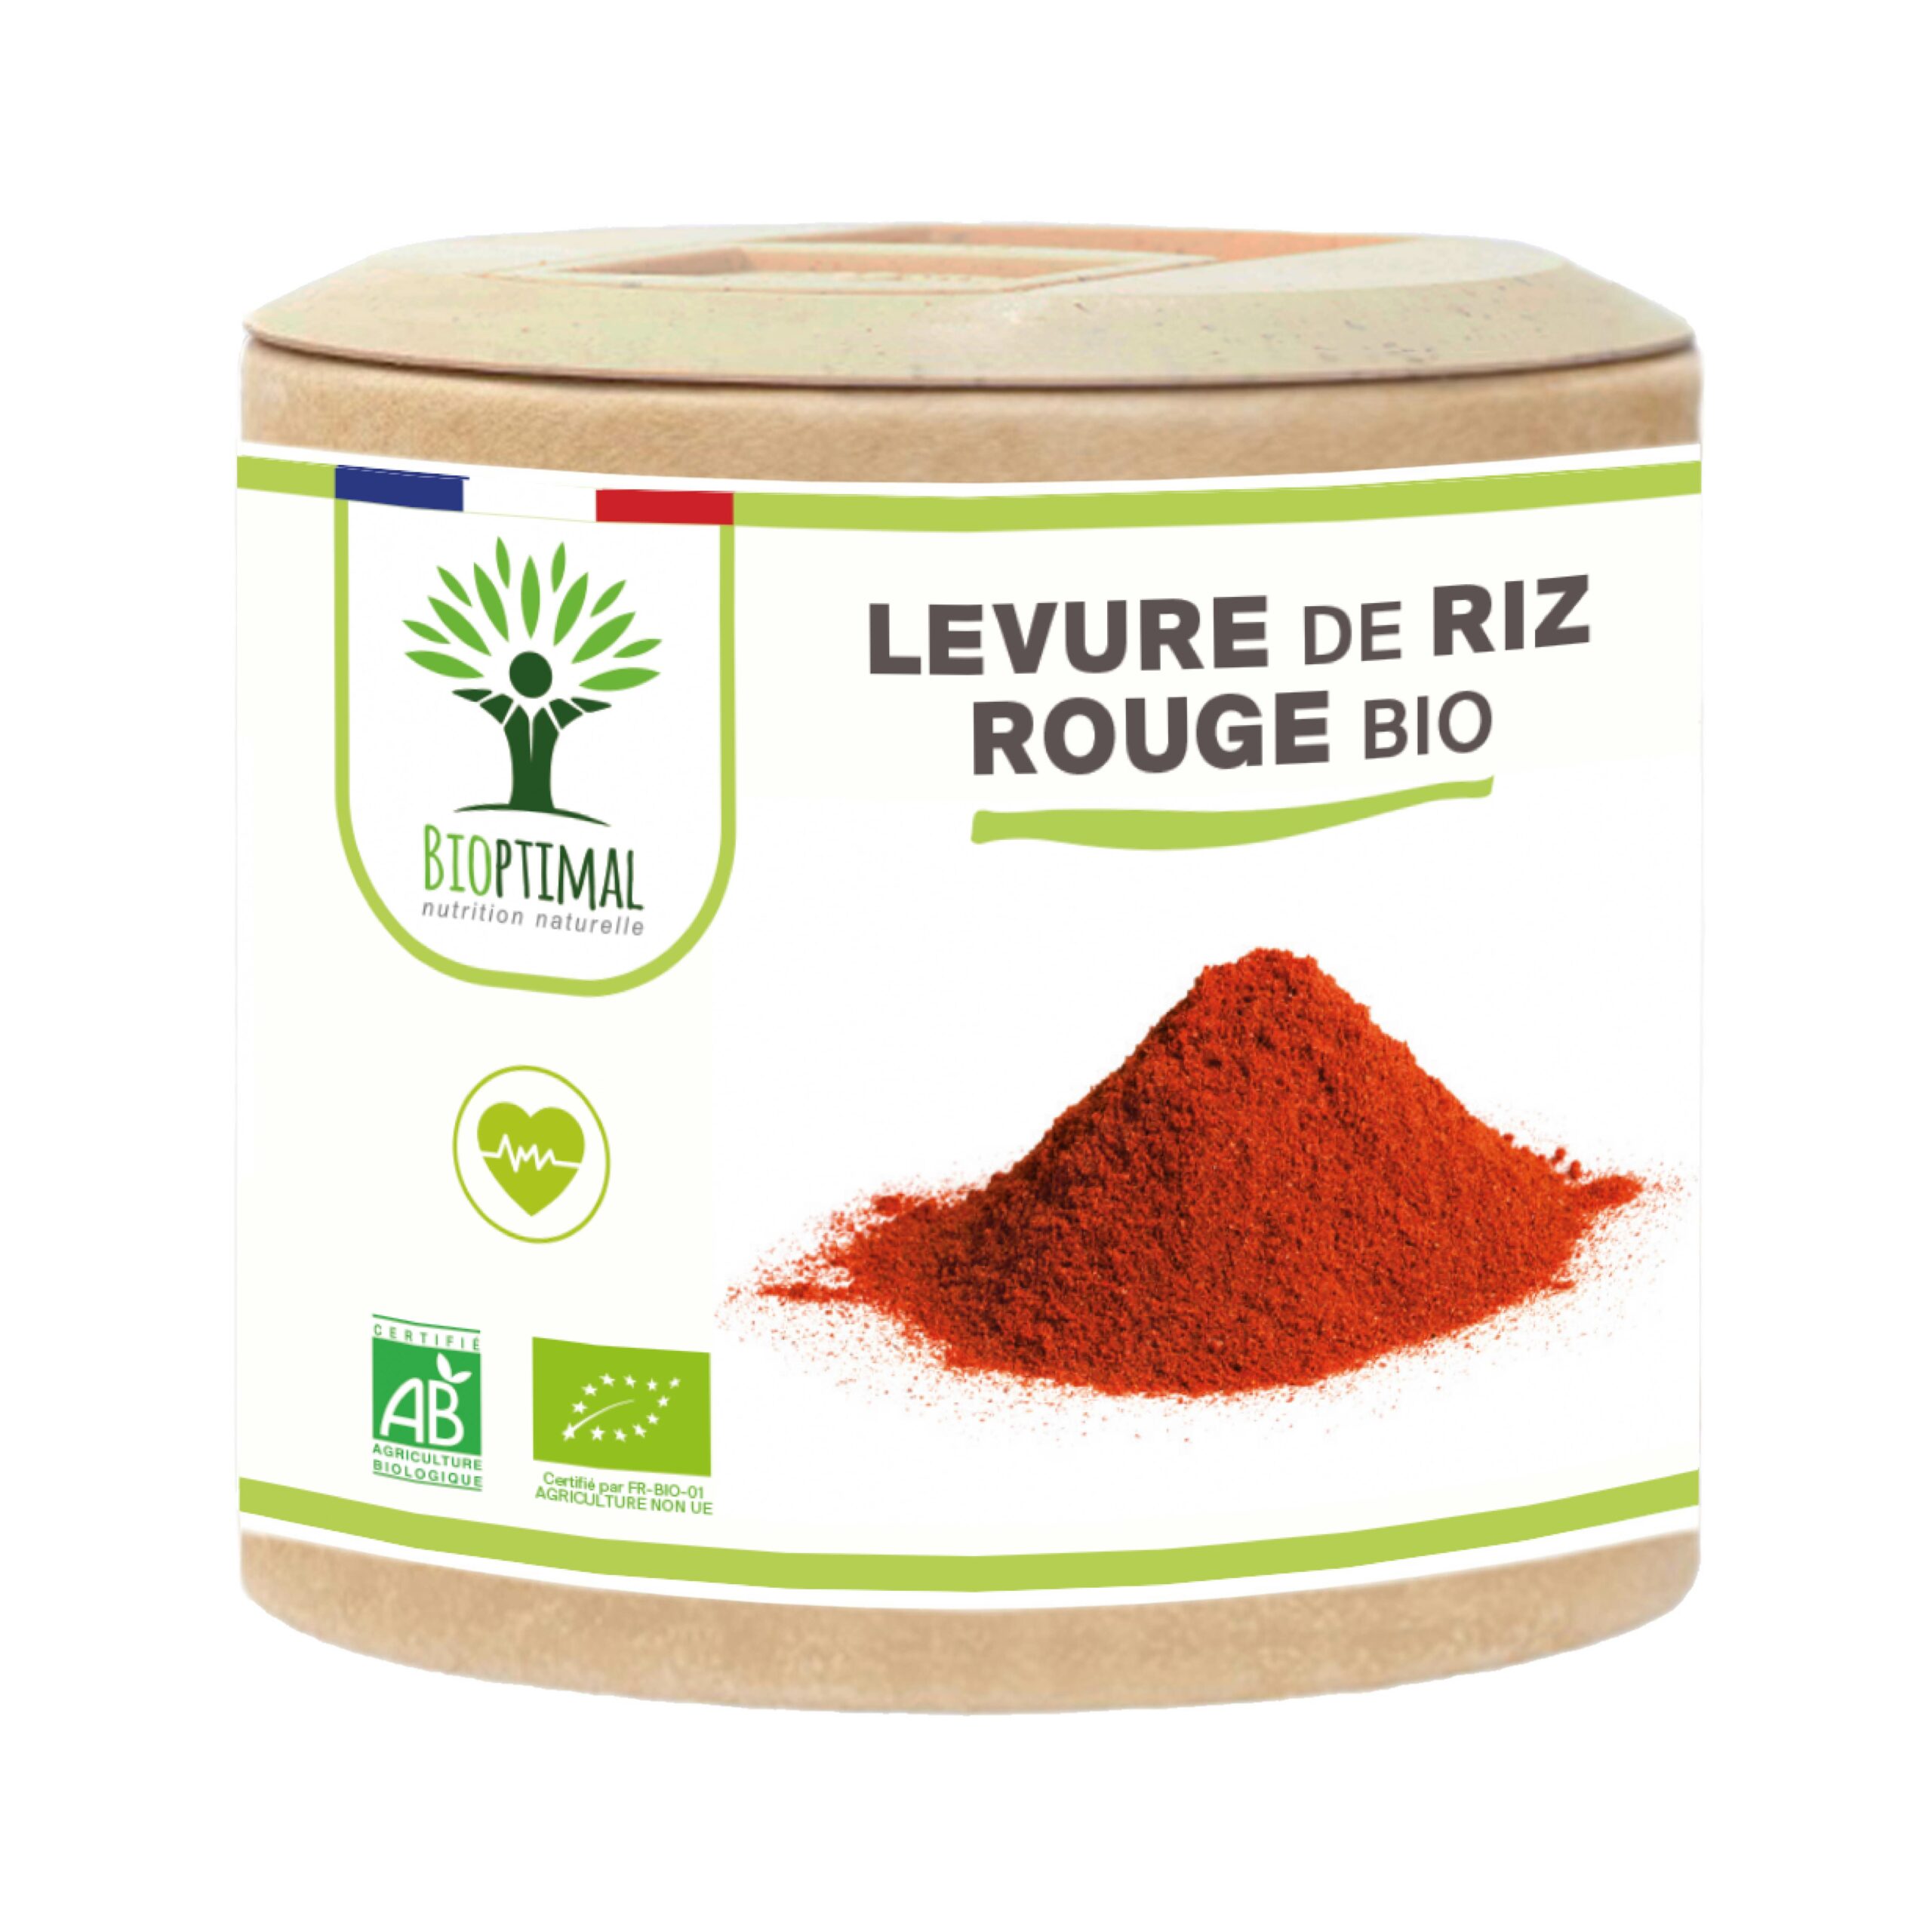 Arkogélules® BIO Levure de riz rouge – Arkopharma France